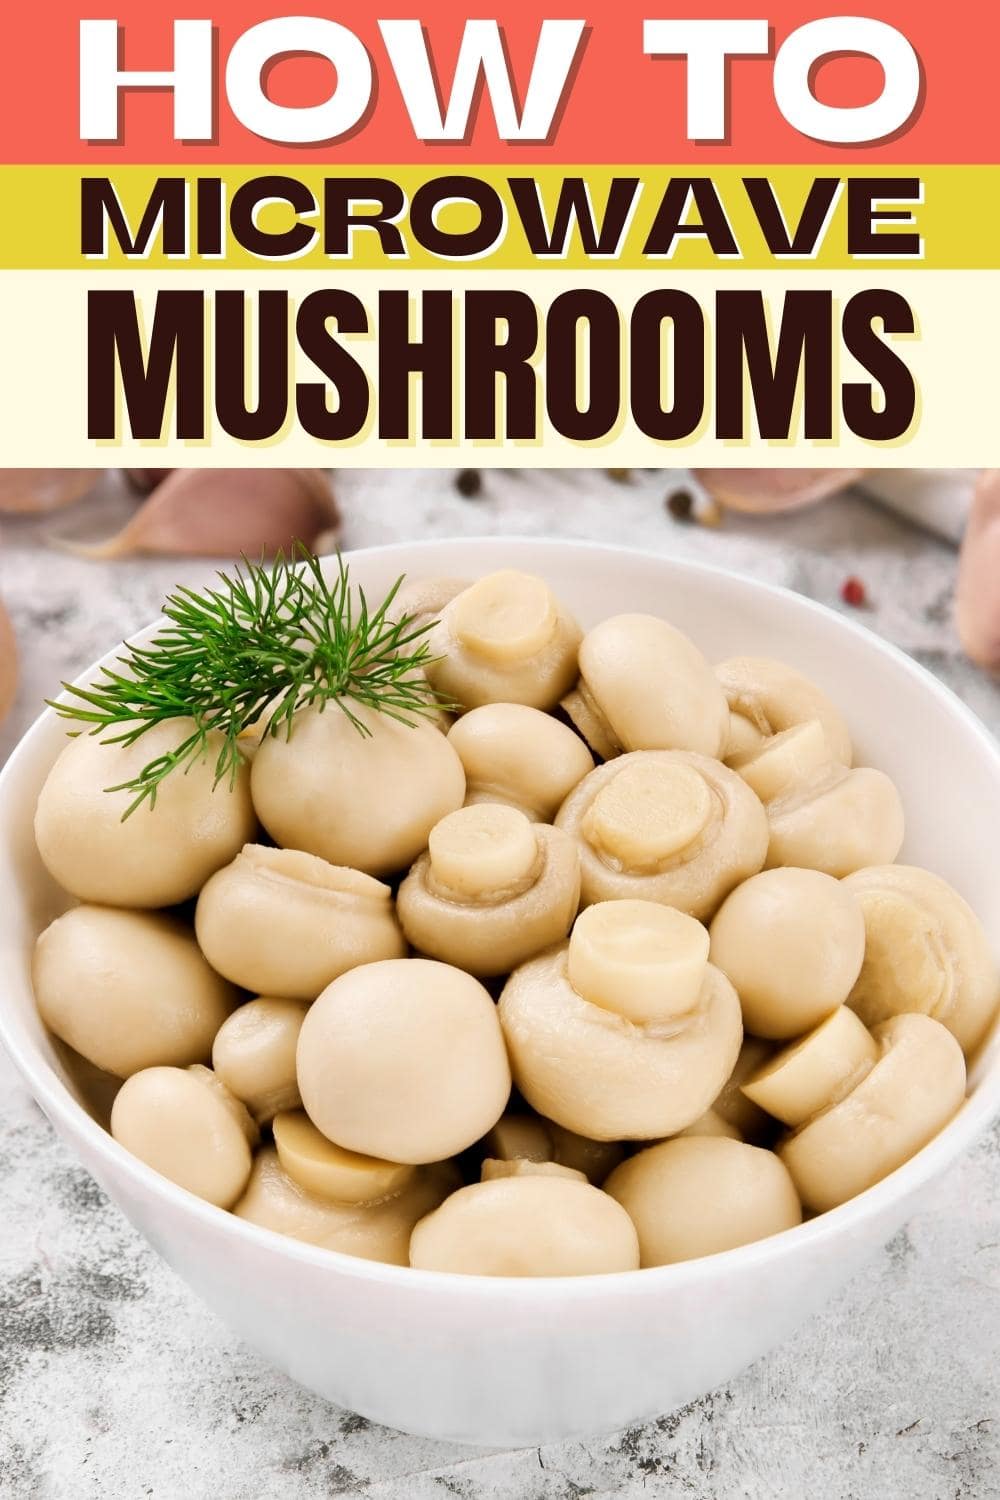 How to Microwave Mushrooms